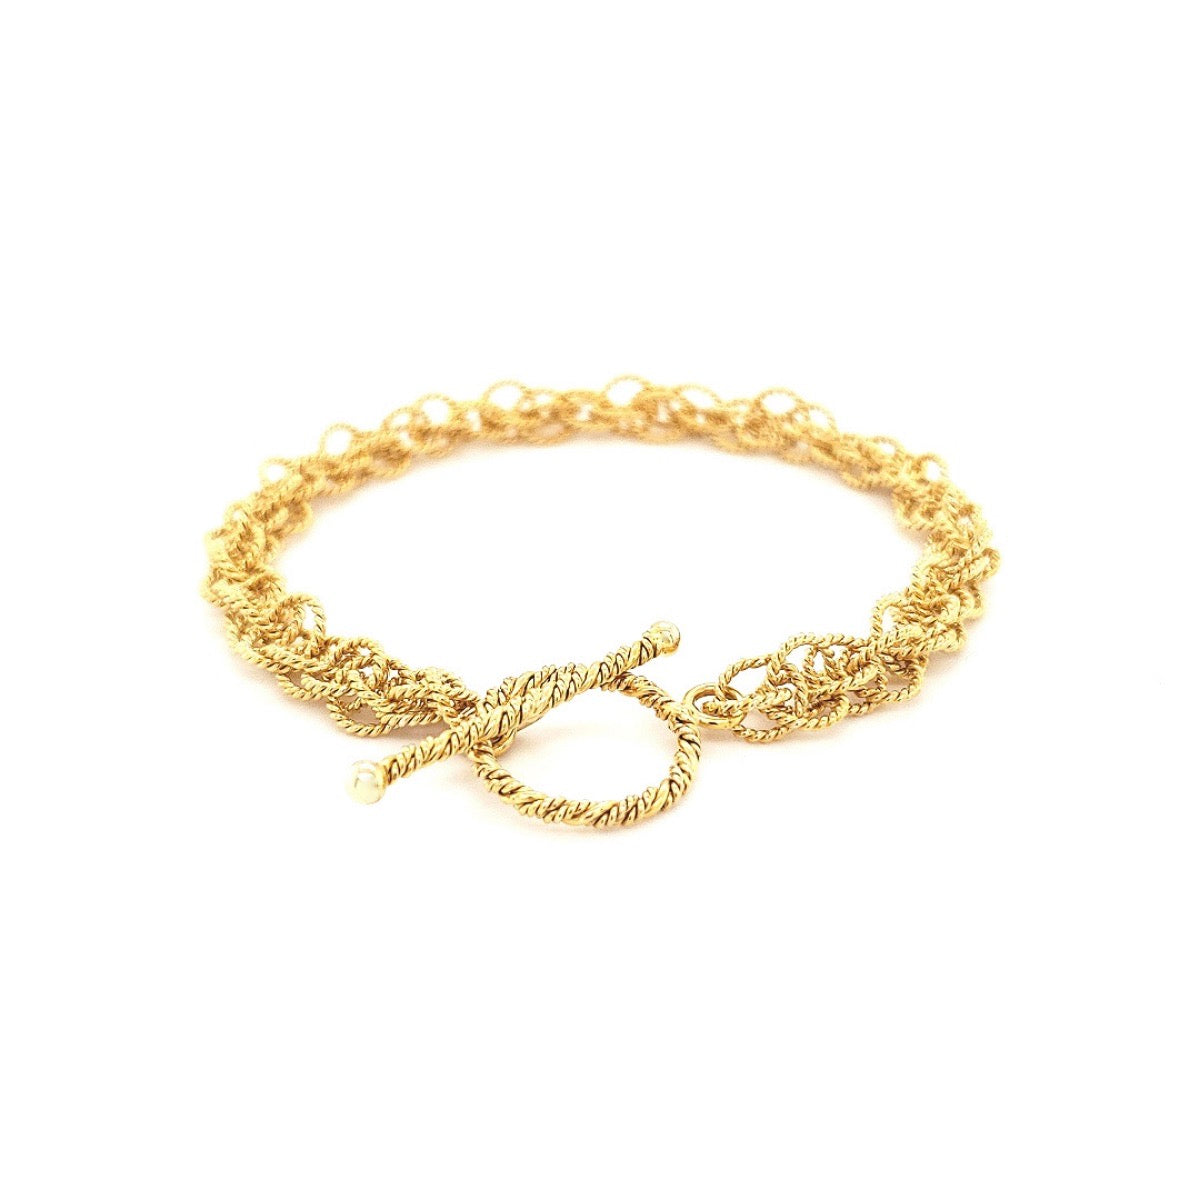 24K Gold Vermeil 6mm Spinner Bracelet on white background / Arpaia Lang